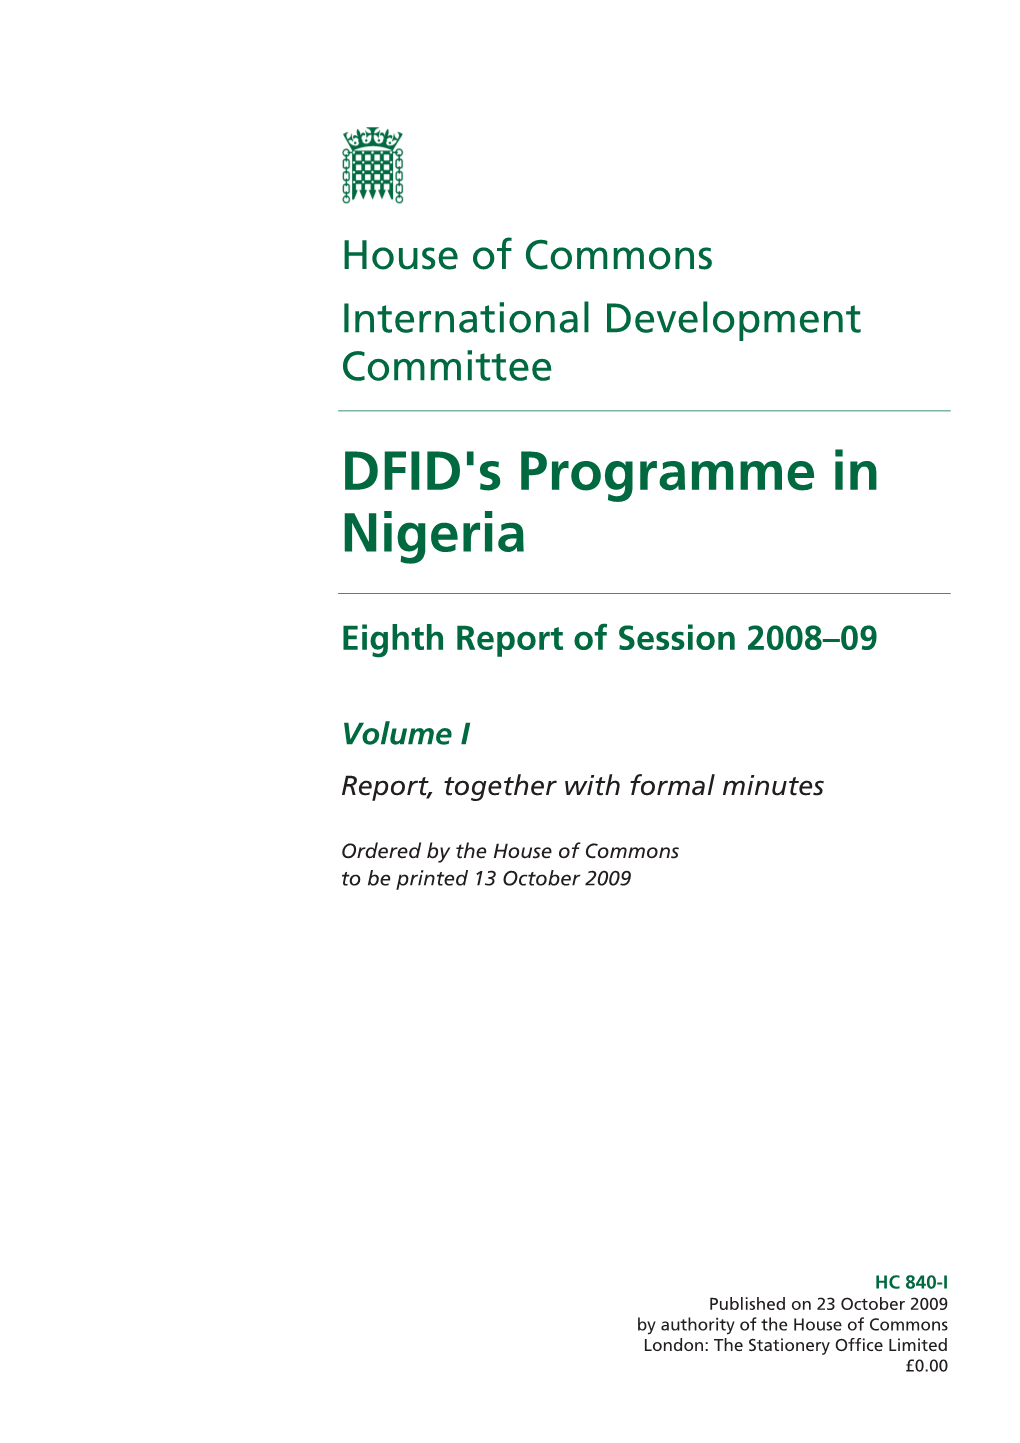 DFID's Programme in Nigeria